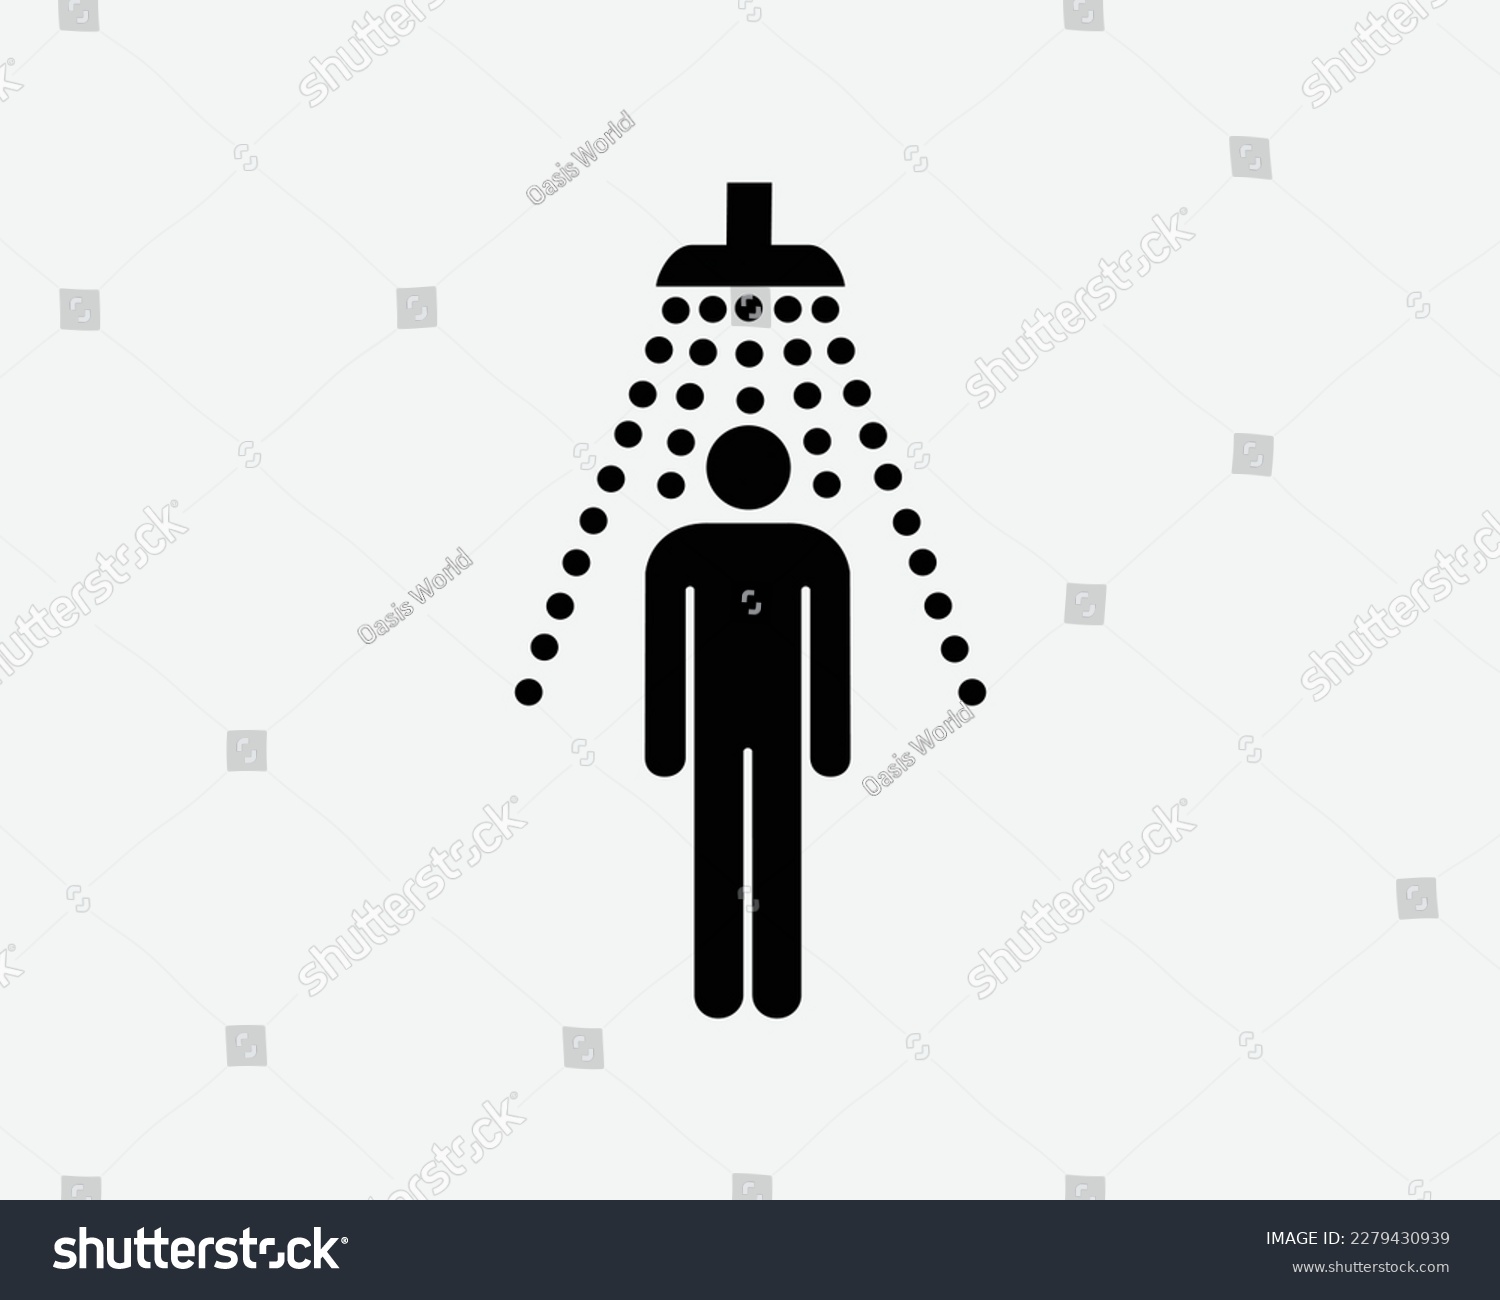 SVG of Man Showering Taking a Shower Stick Figure Black White Silhouette Sign Symbol Icon Vector Graphic Clipart Illustration Artwork Pictogram svg